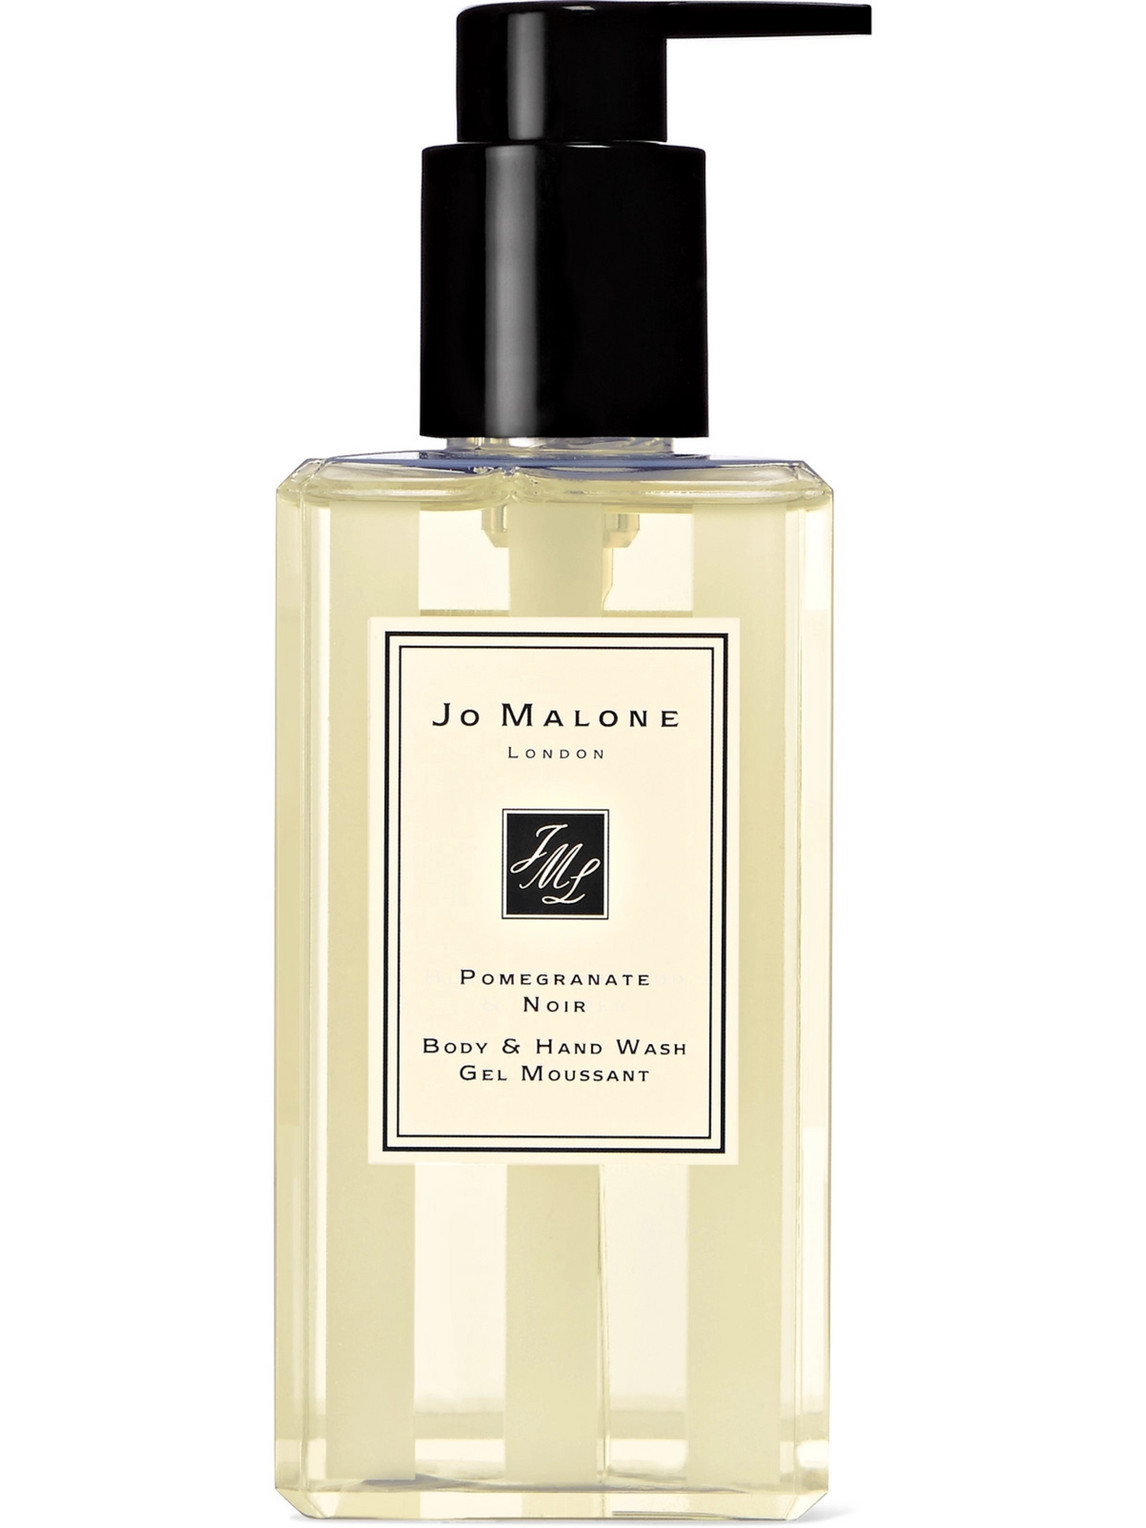 Jo Malone London Pomegranate Noir Body & Hand Wash, 250ml In Colorless